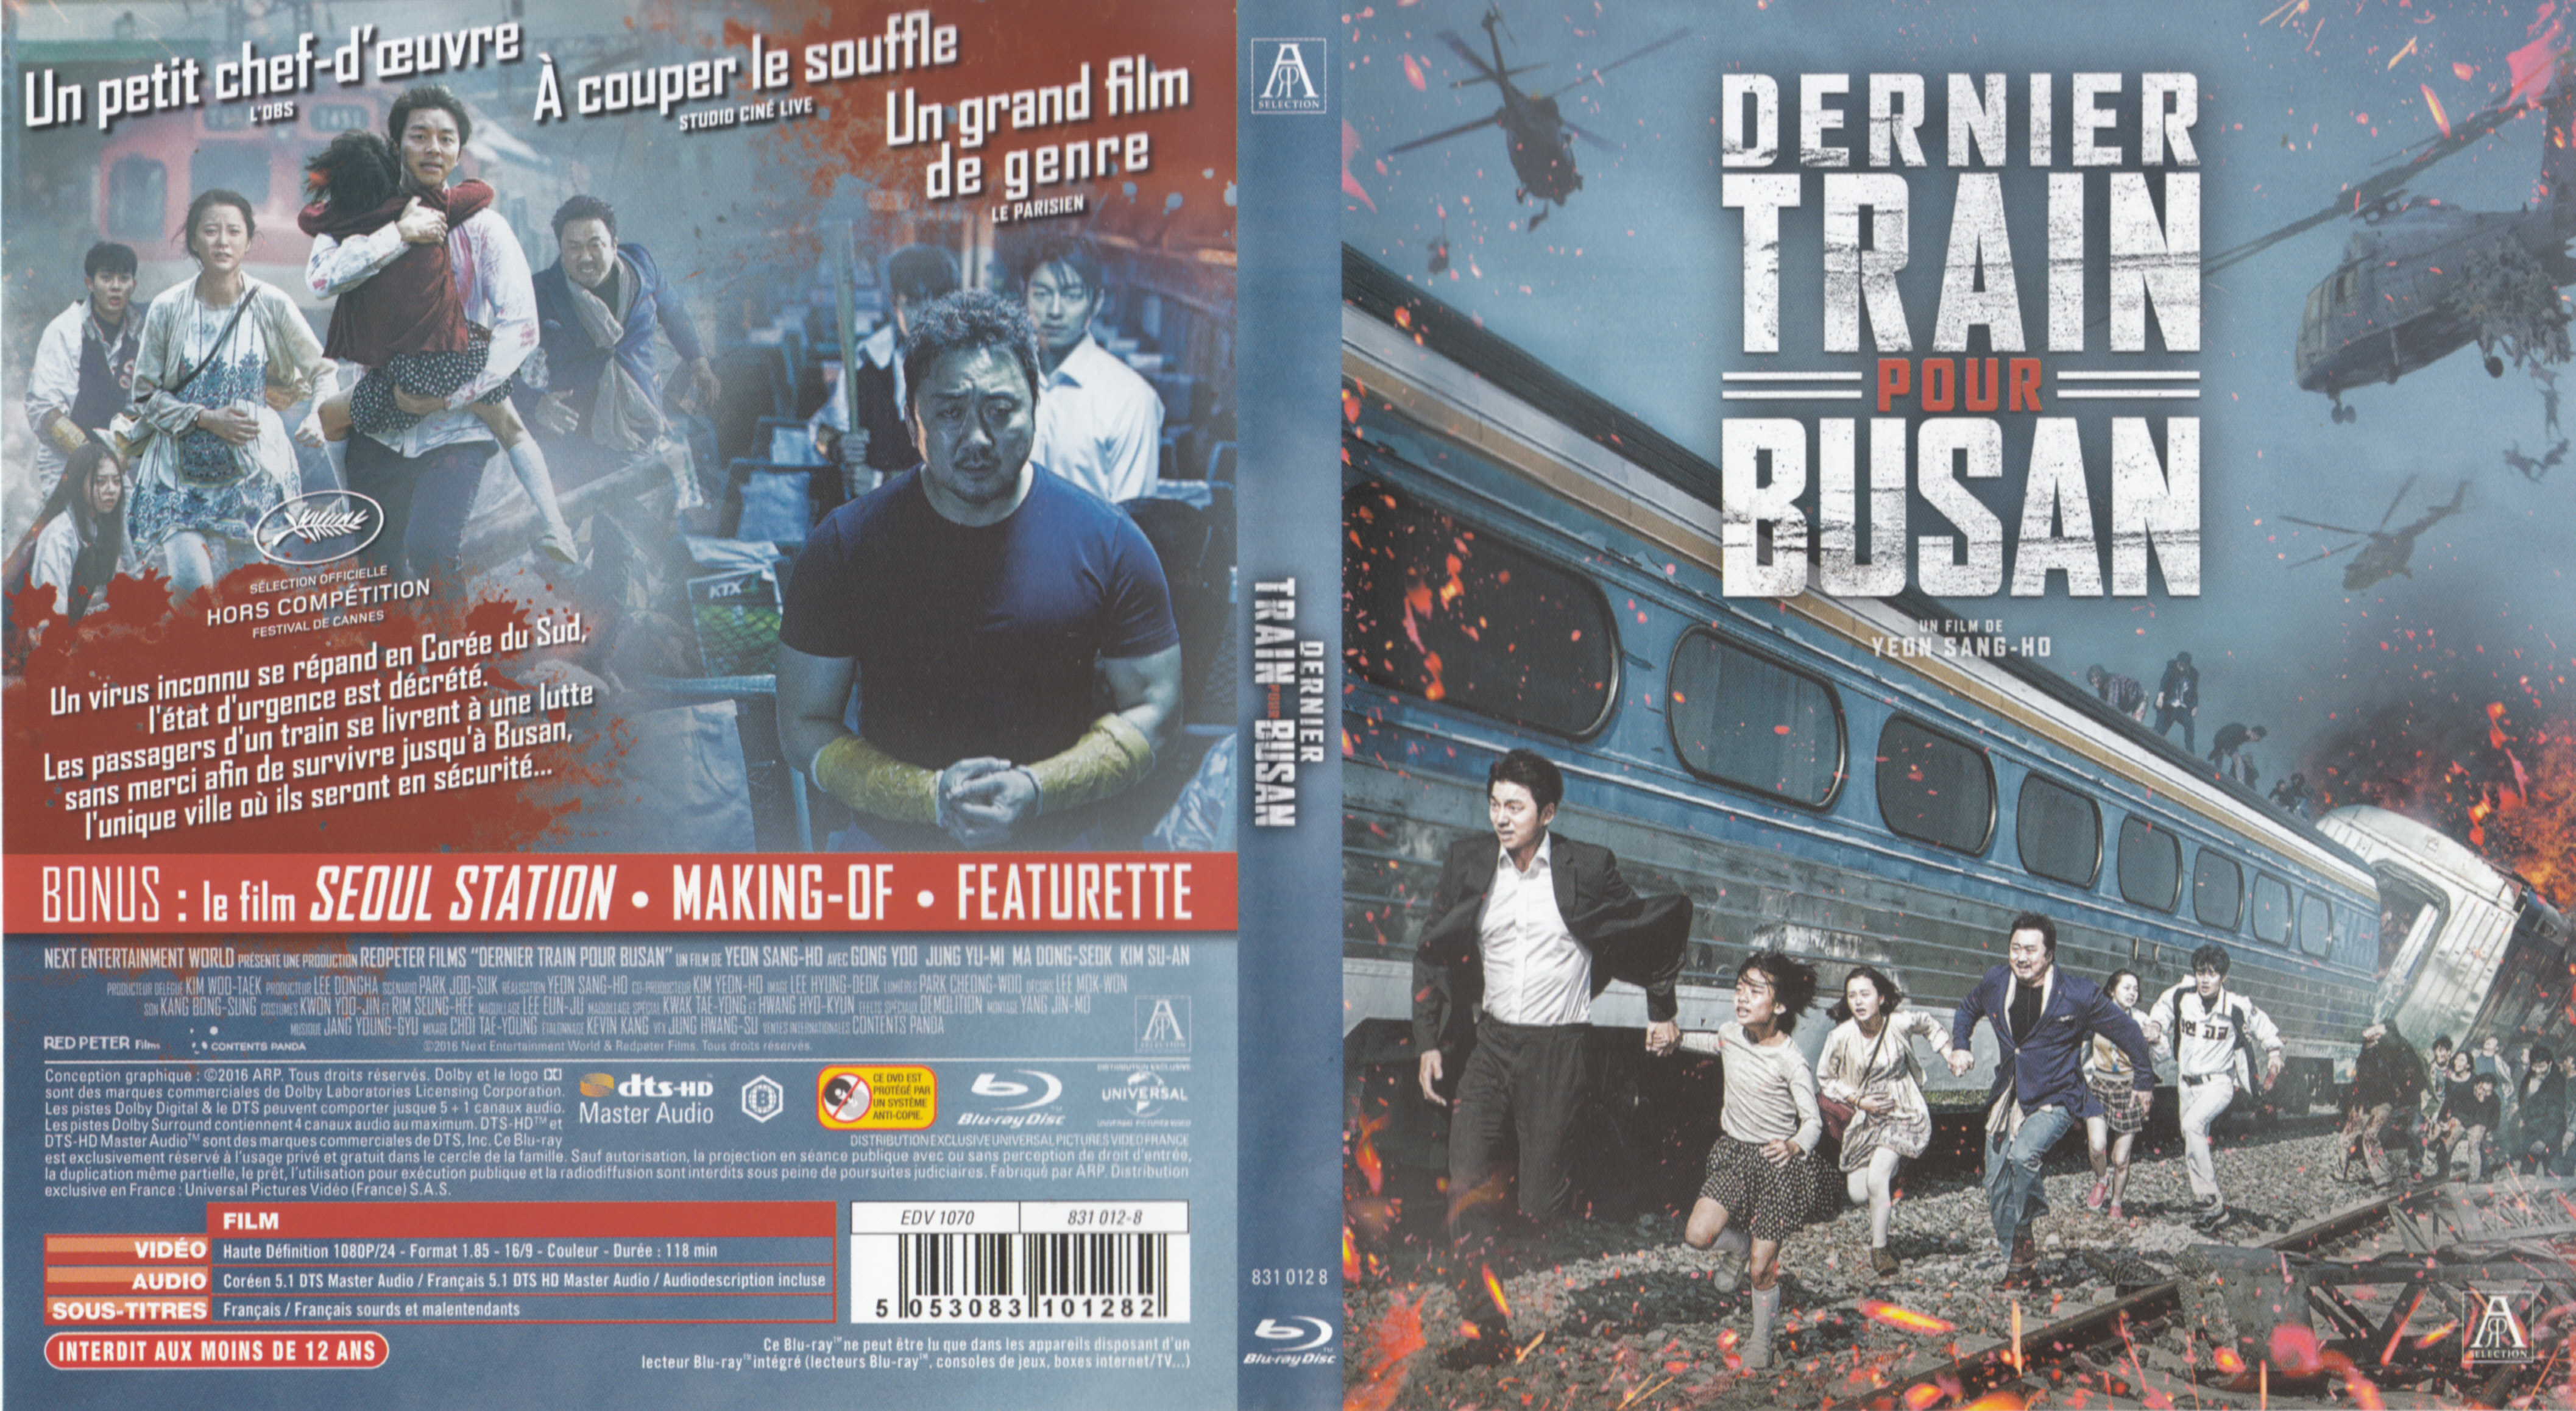 Jaquette DVD Dernier train pour busan (BLU-RAY) v2